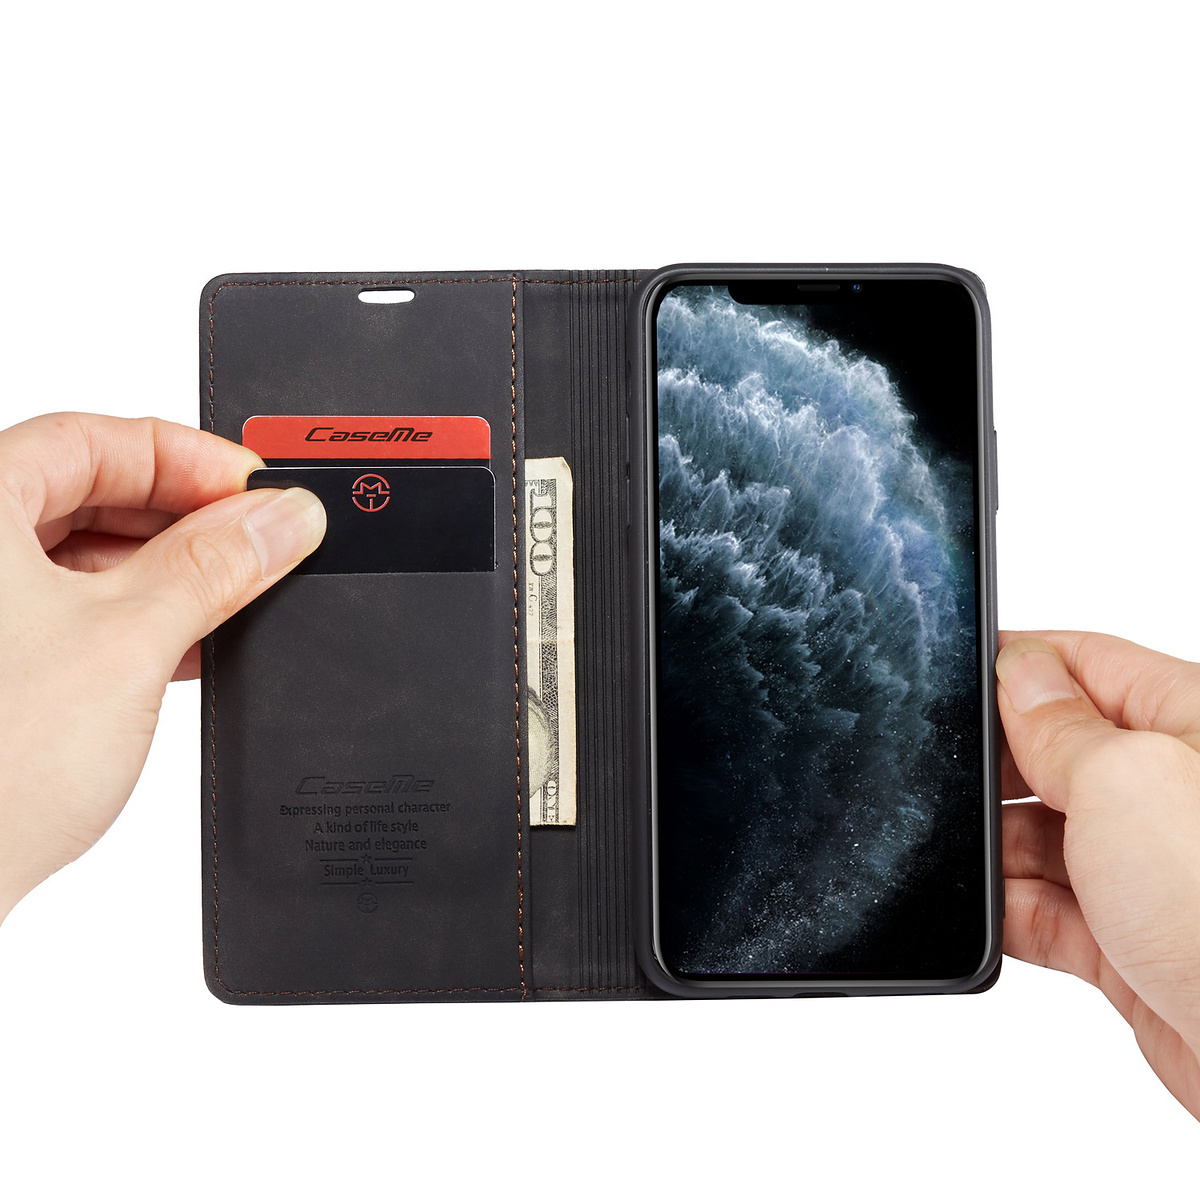 CaseMe plånboksfodral till iPhone 11 Pro, svart